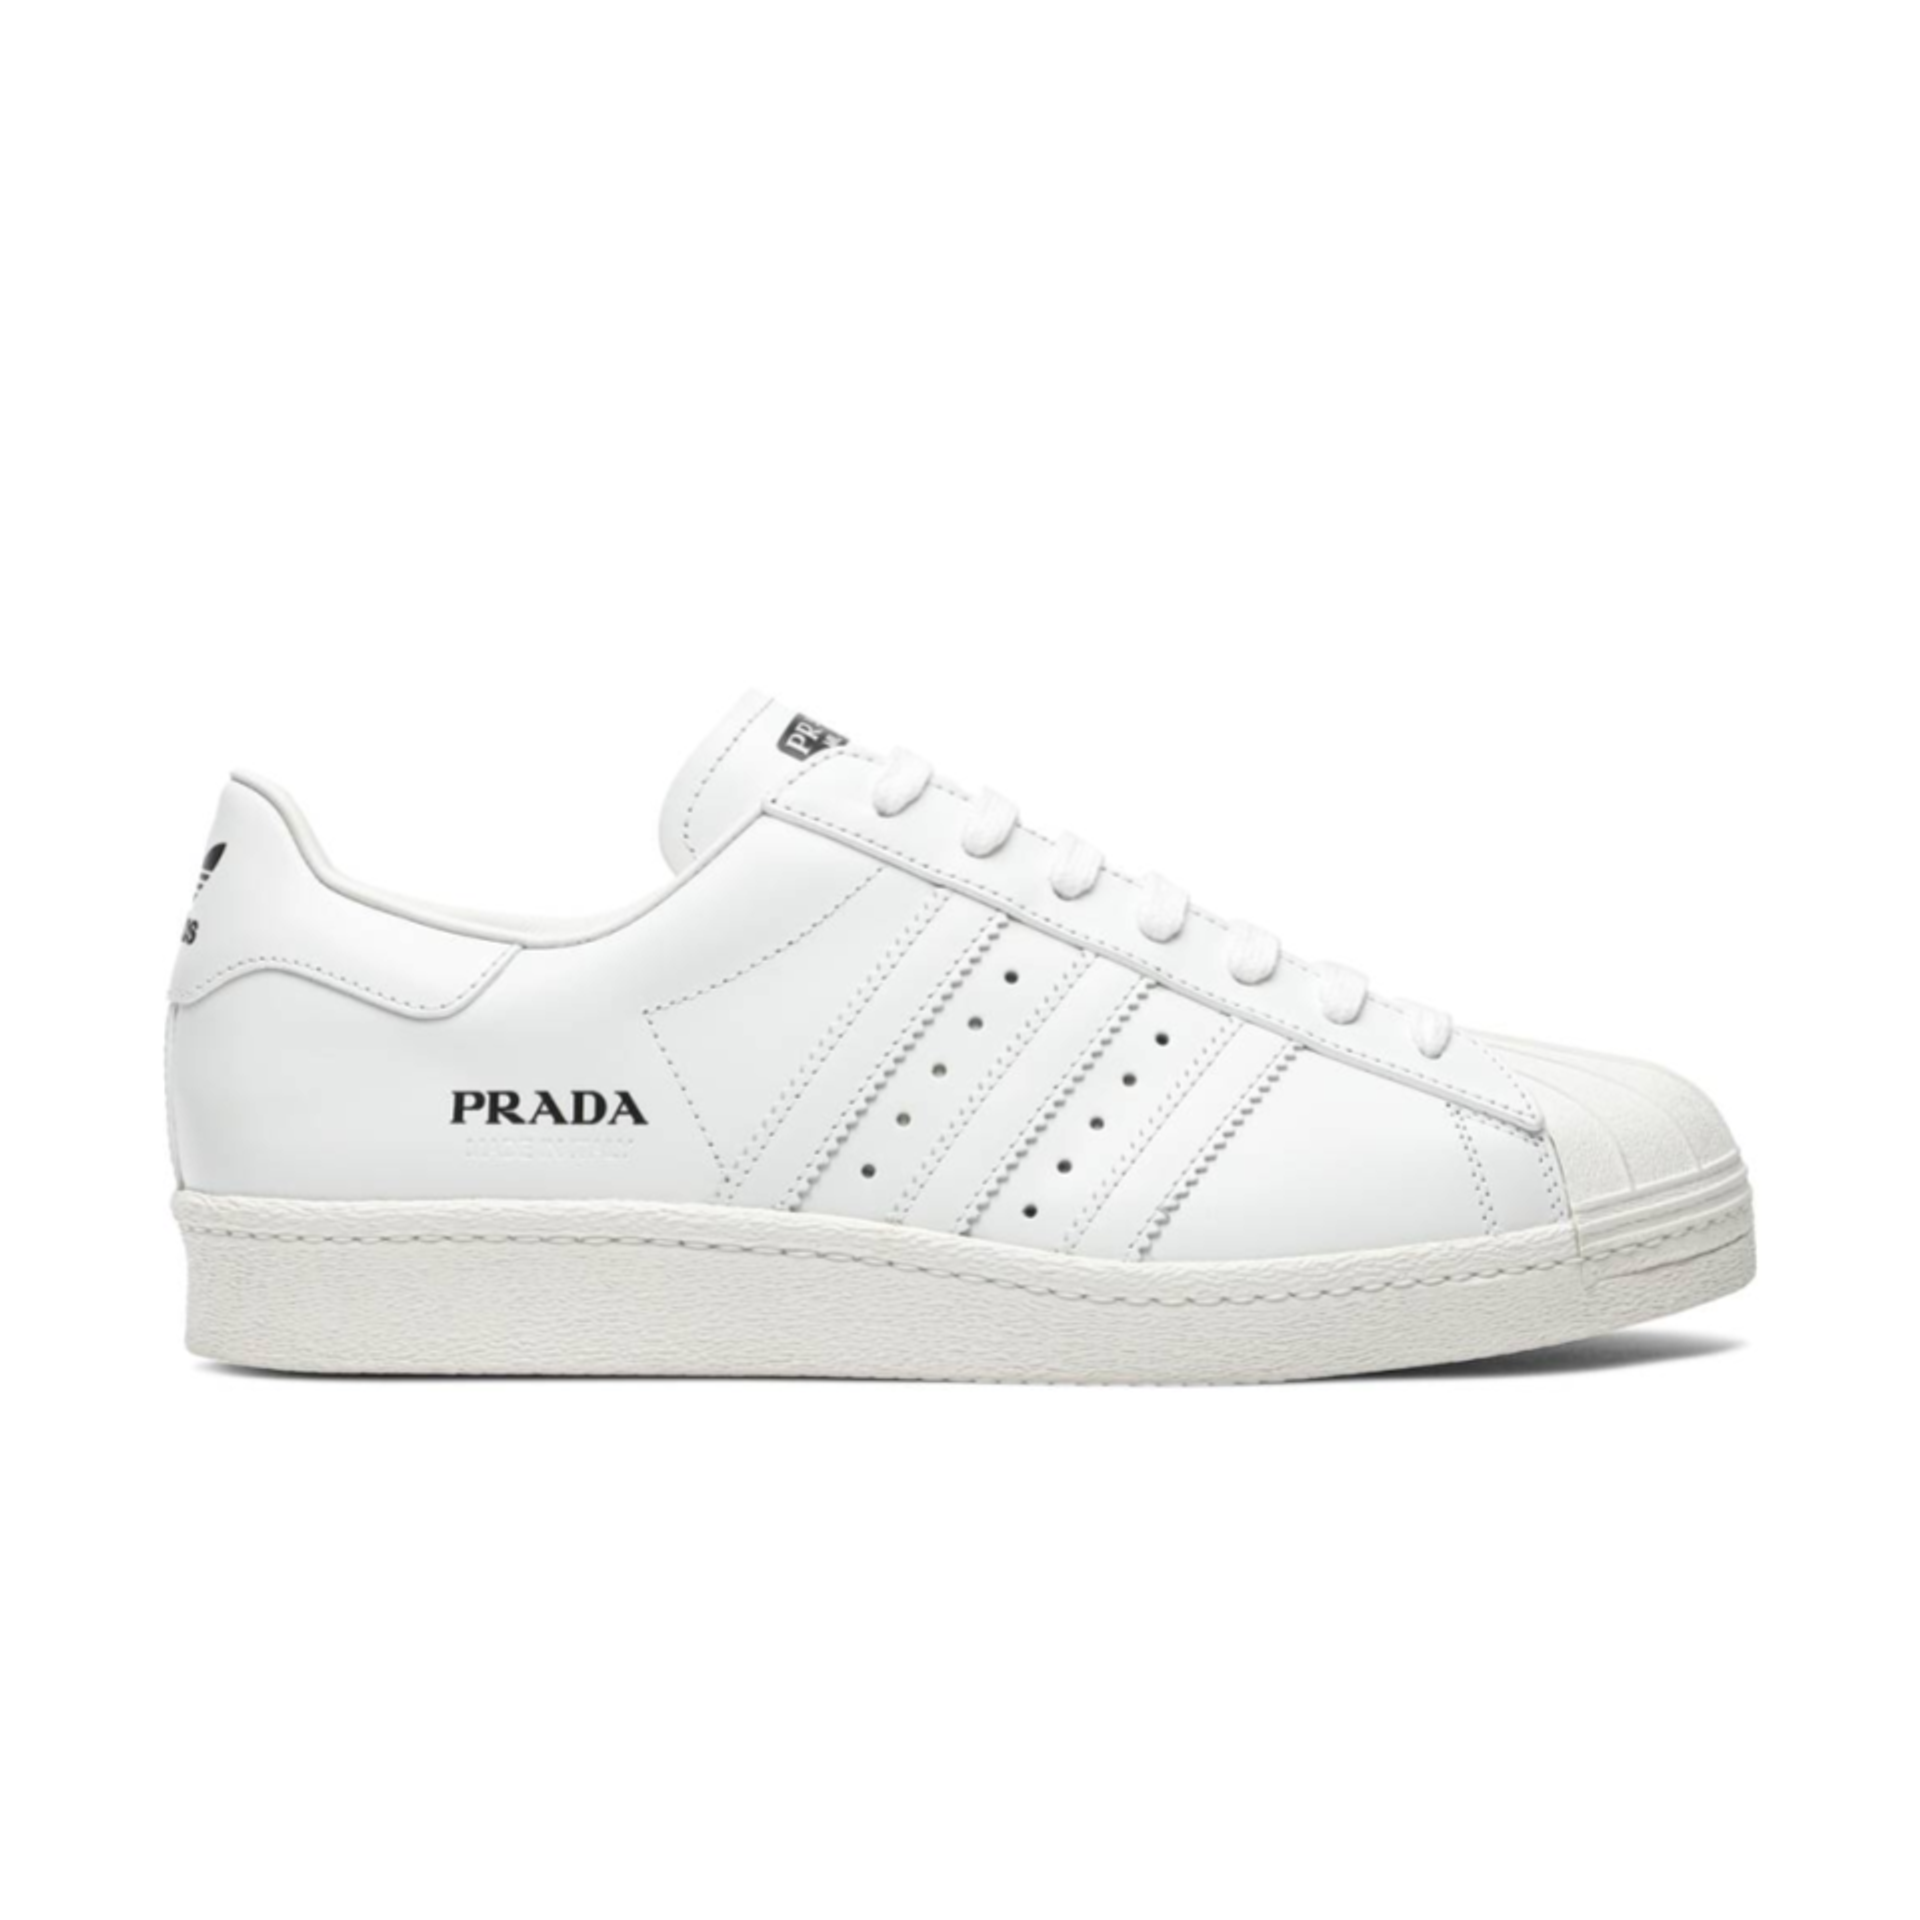 adidas Prada x Superstar 'Core White' Adidas Release